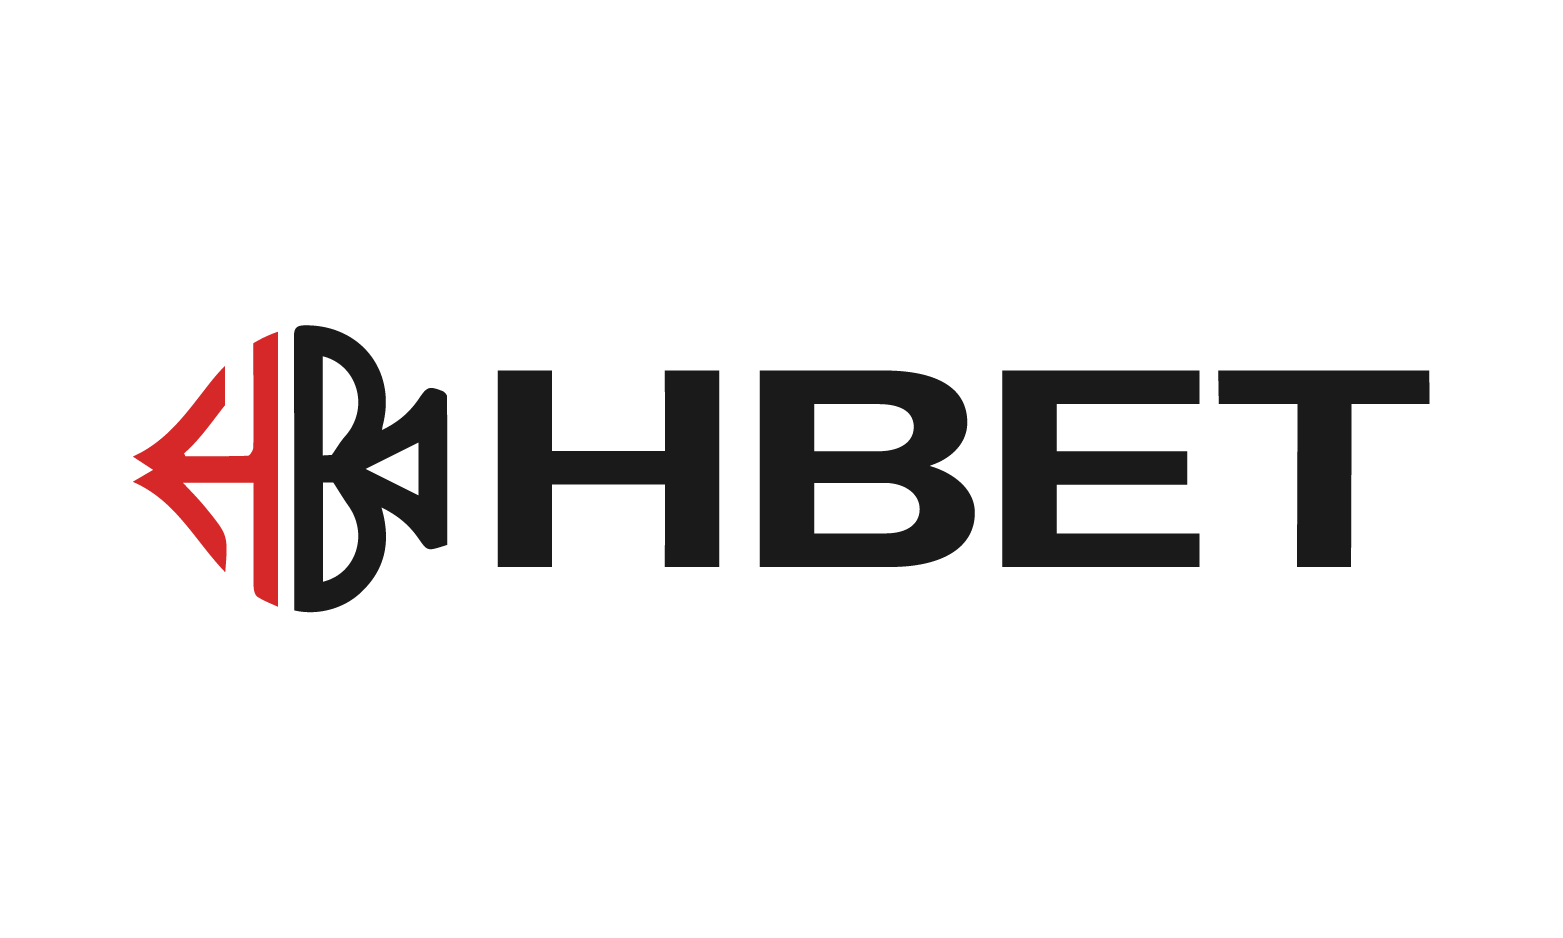 HBET.io - Creative brandable domain for sale